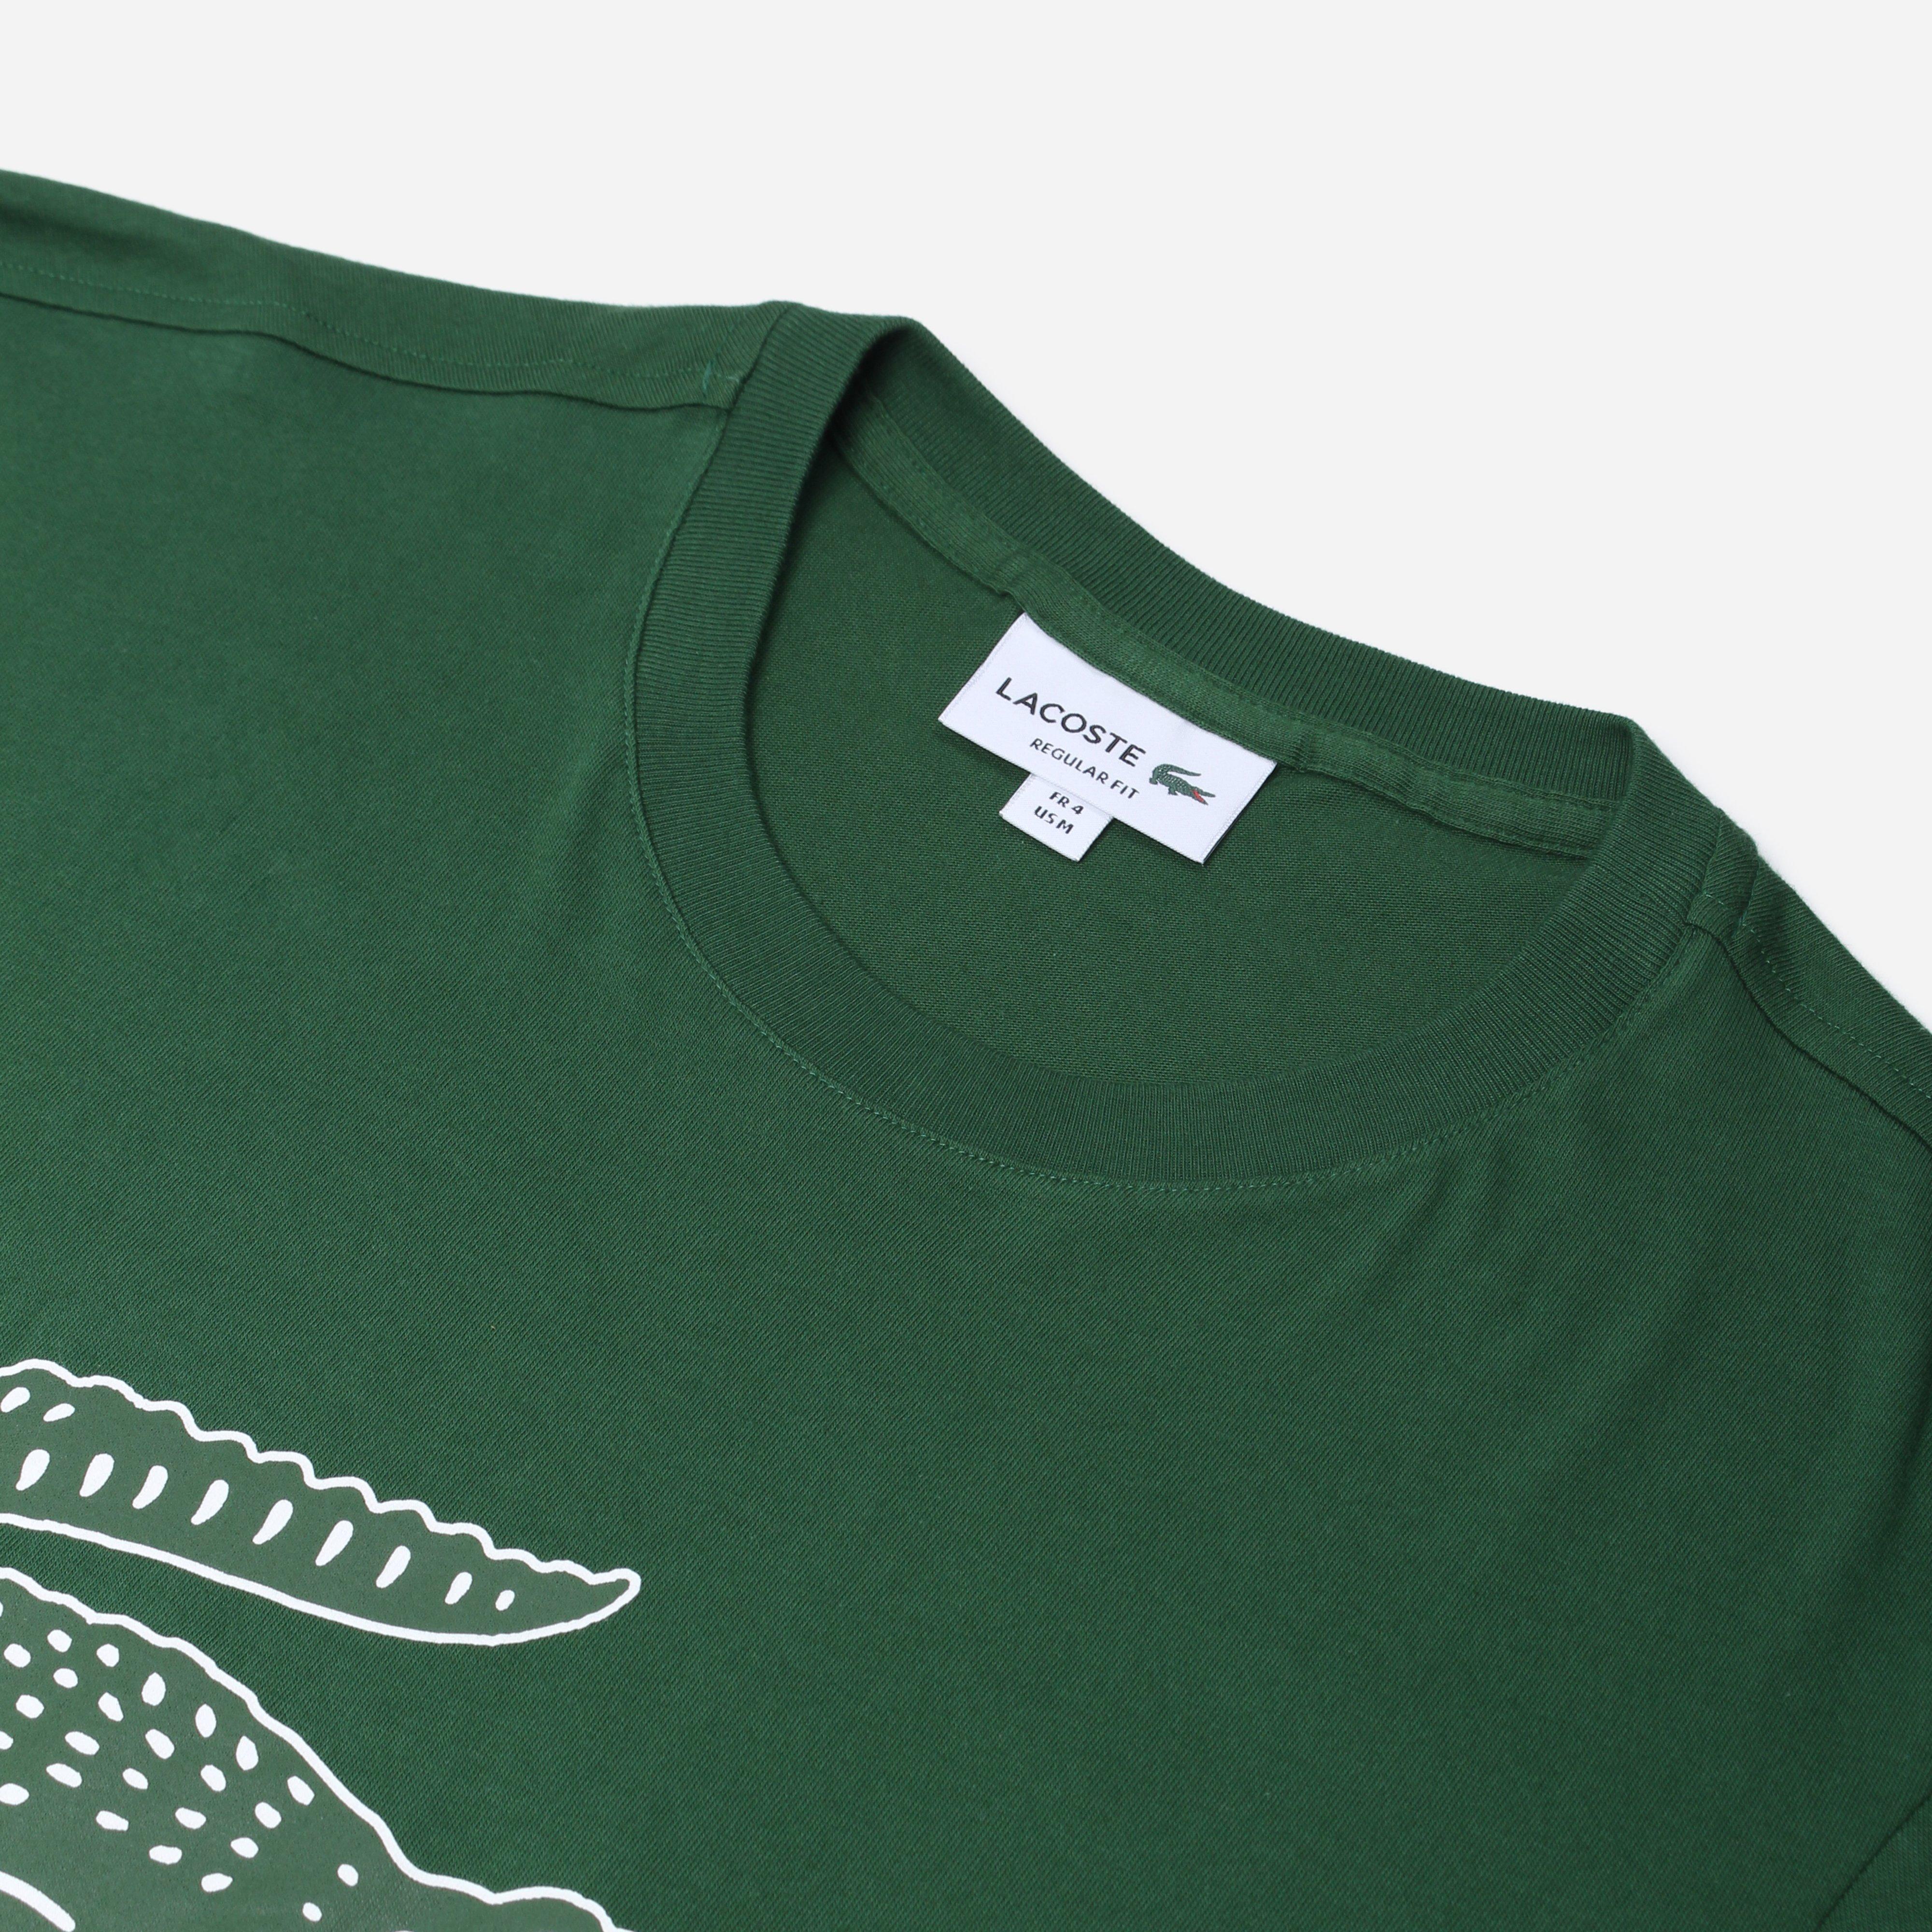 Lacoste Large Logo T-shirt - Green for Men - Lyst